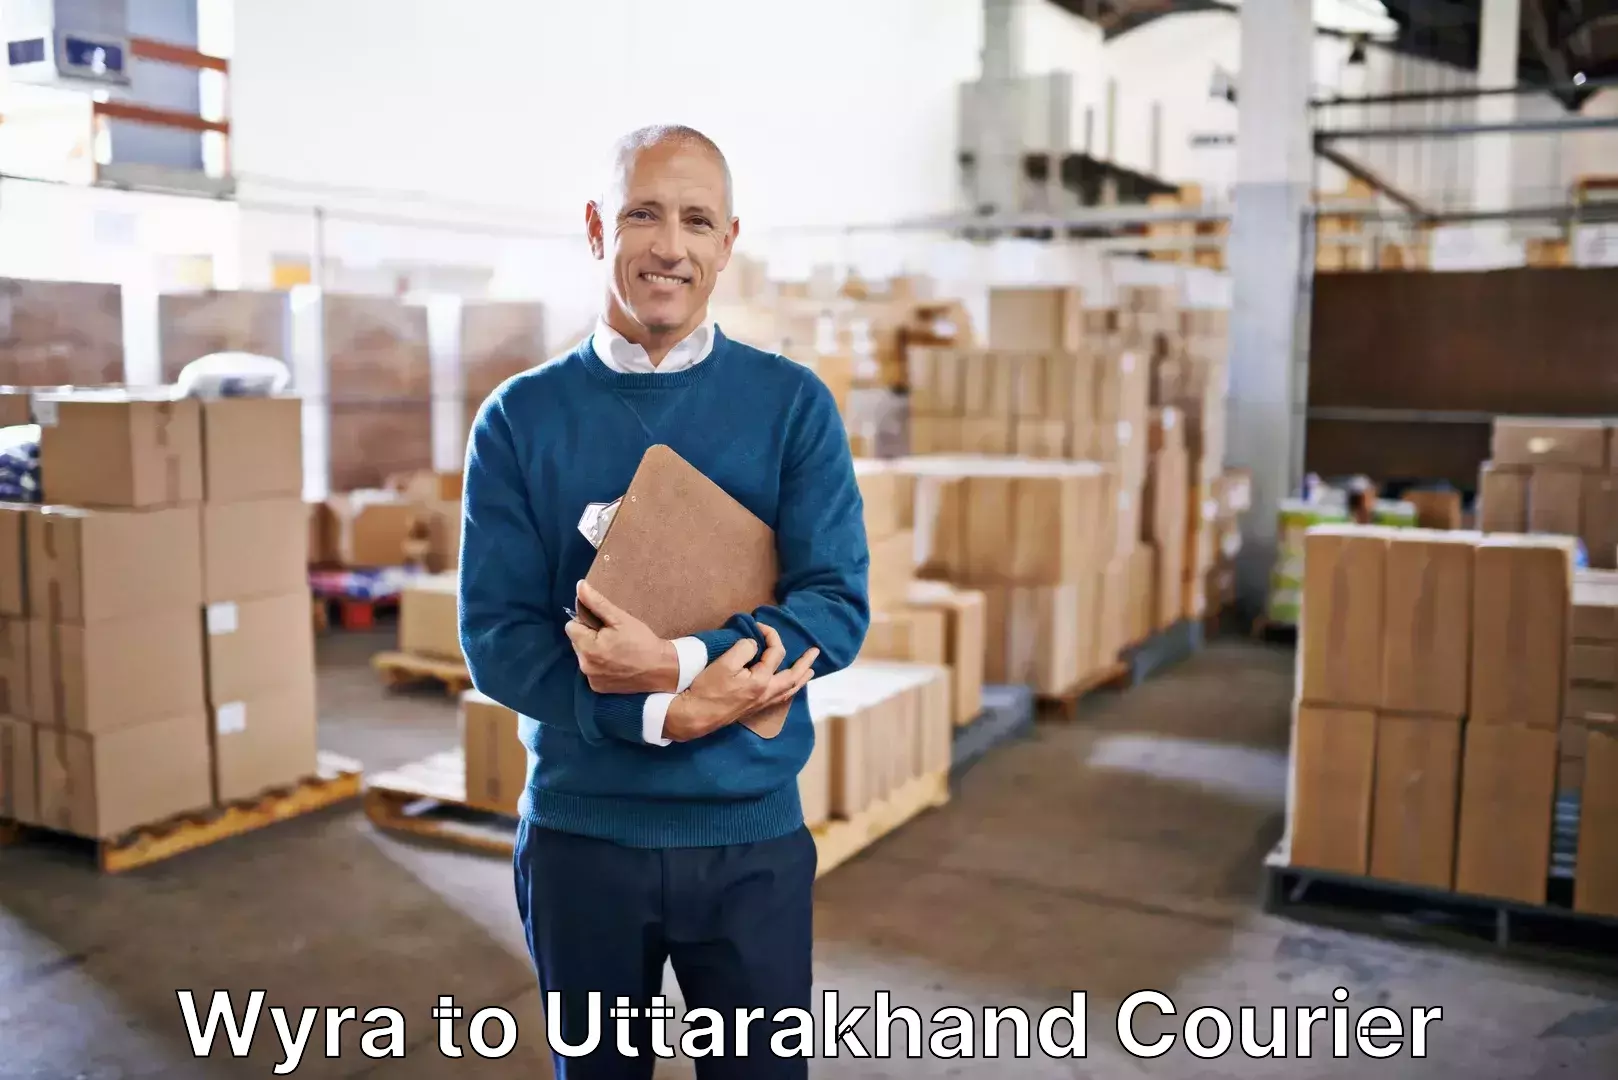 Luggage shipment specialists Wyra to Uttarakhand